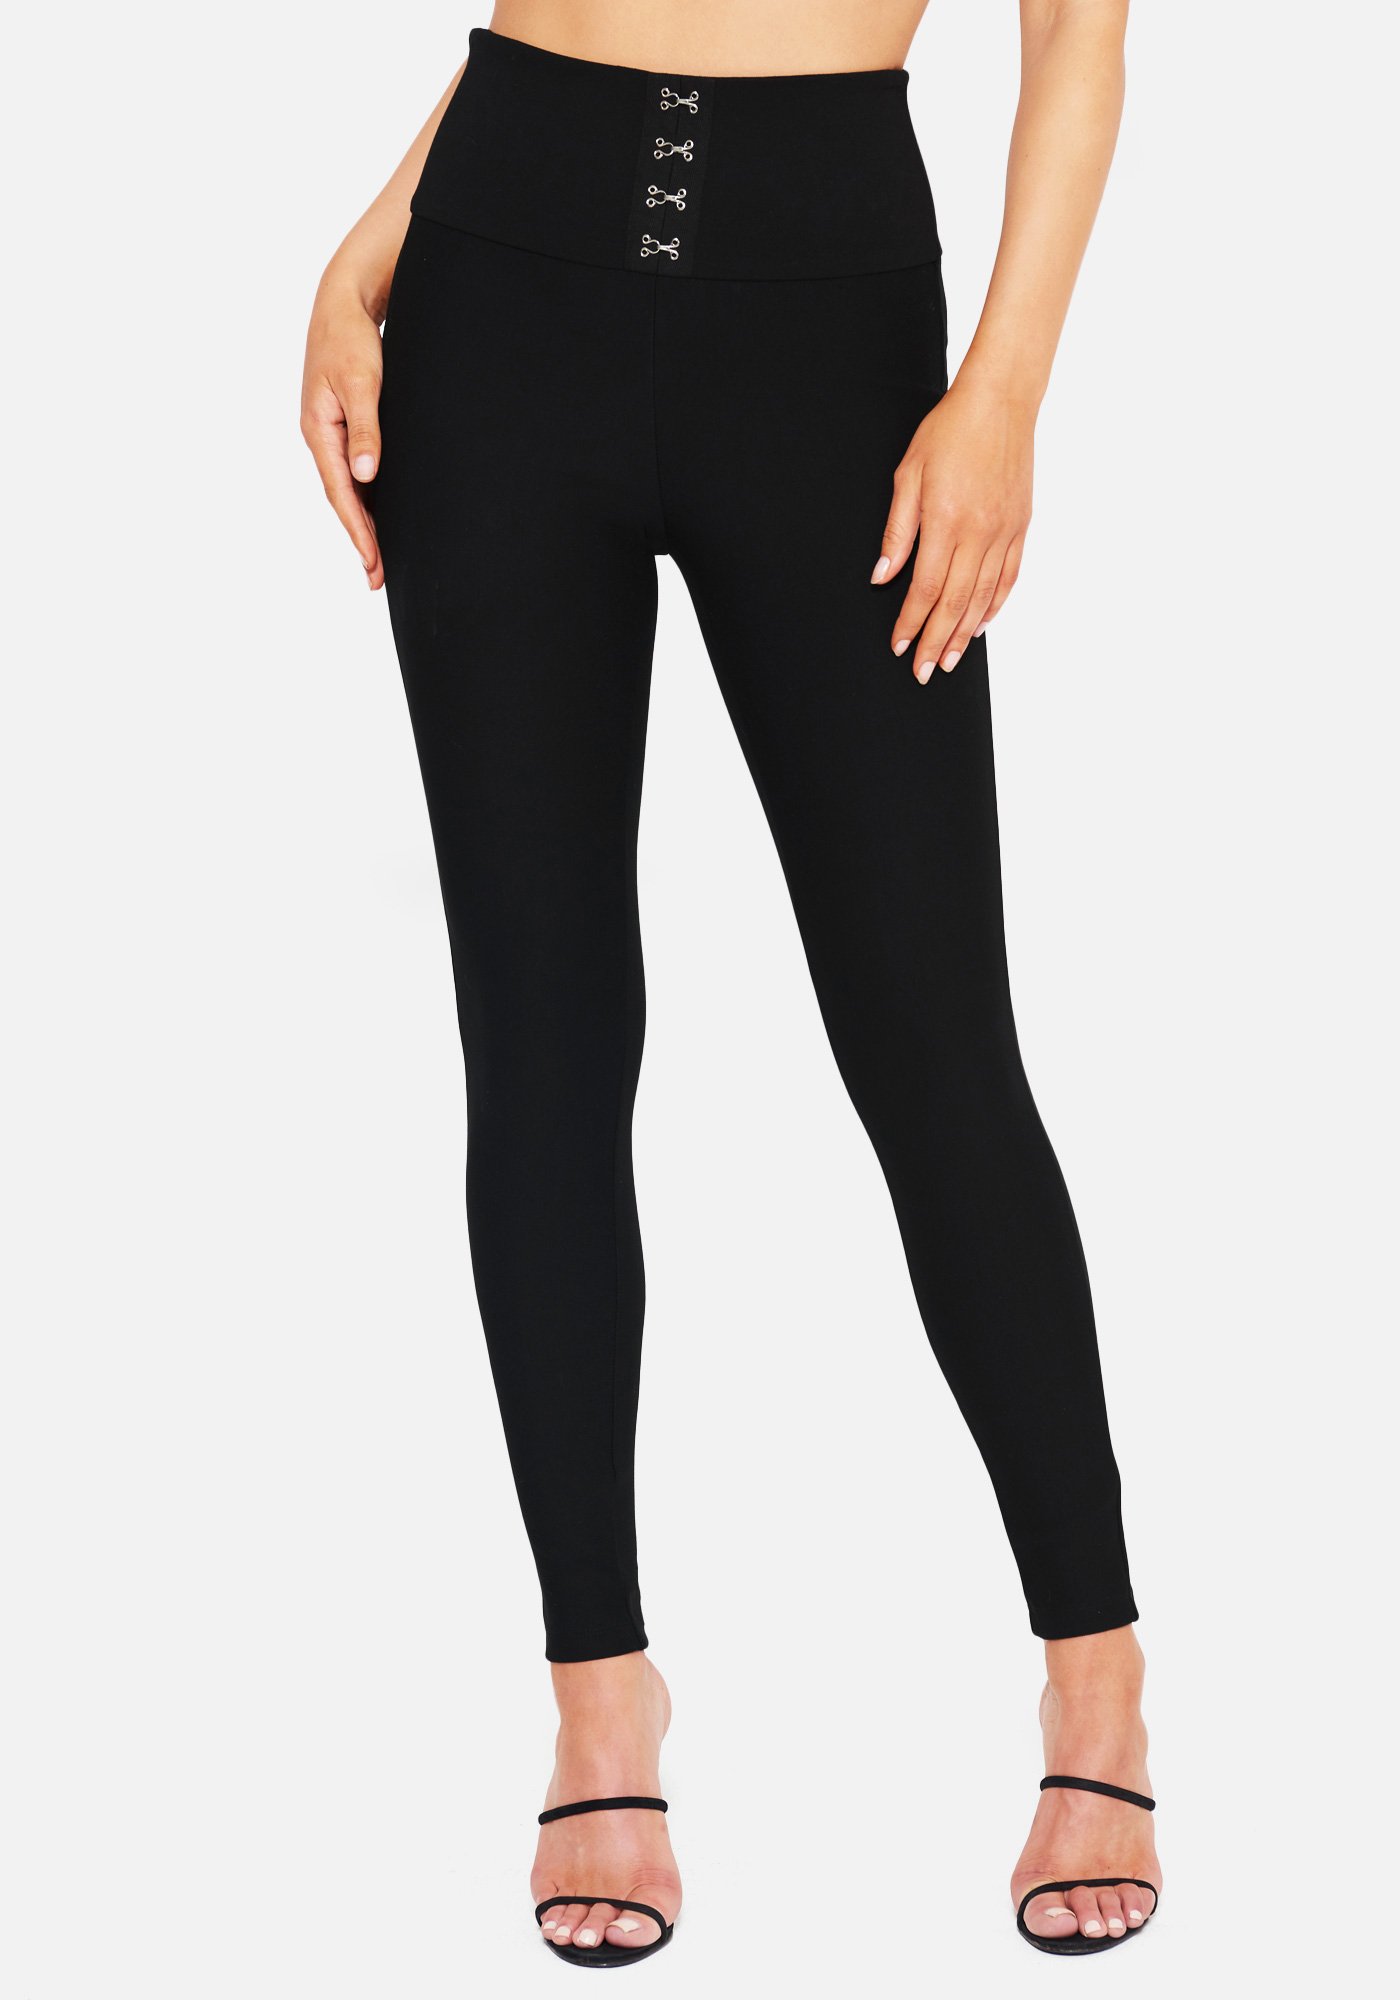 Bebe Women's Corset High Waist Legging, Size XS in BLACK Spandex/Nylon